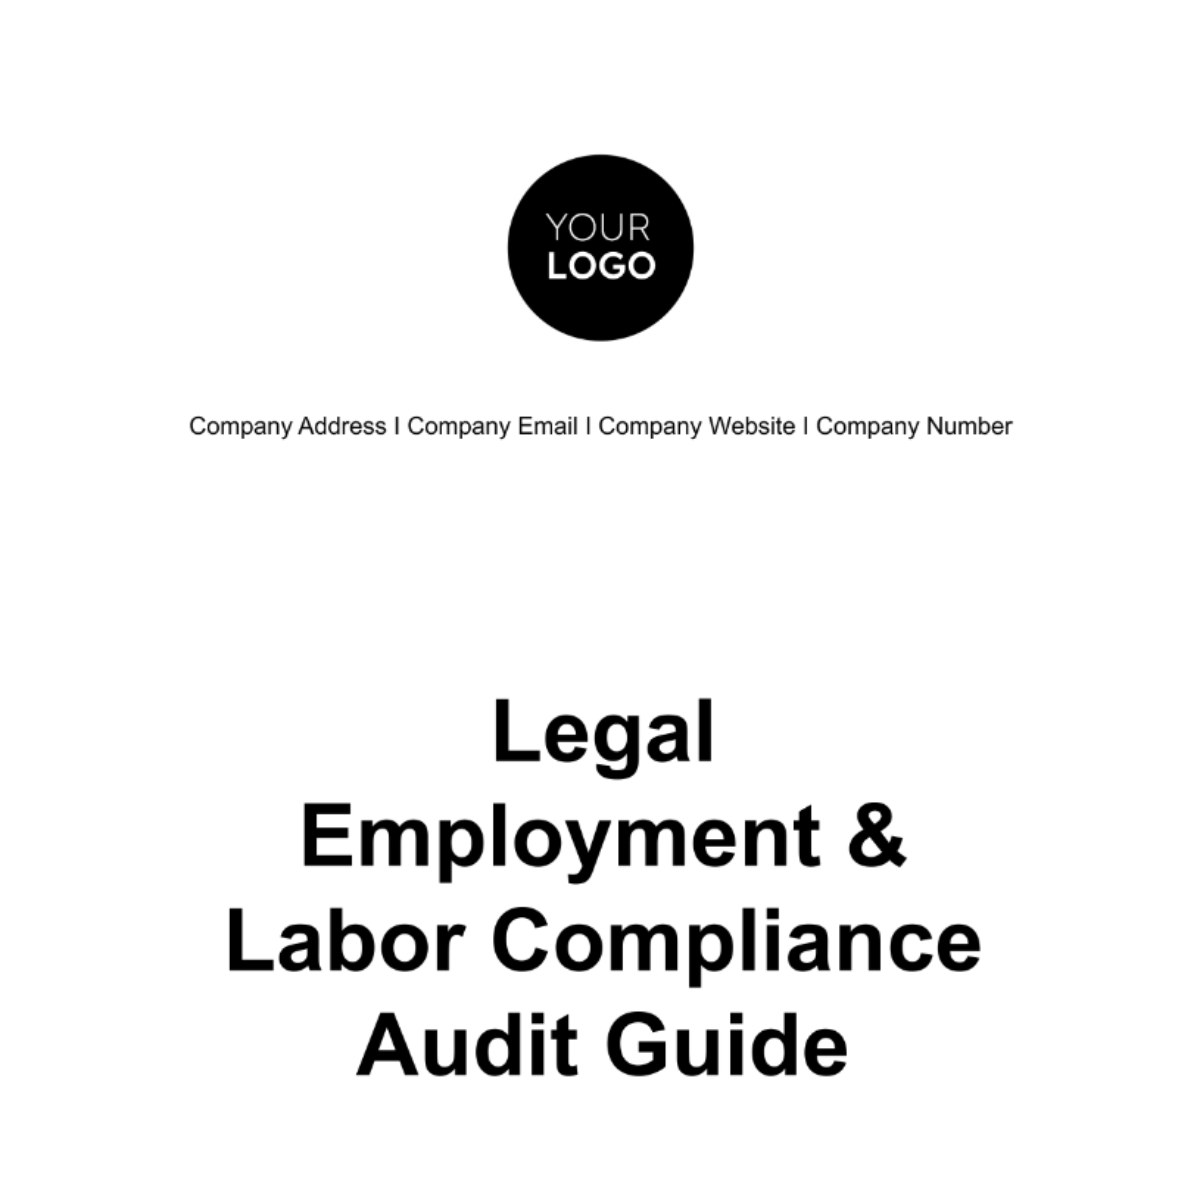 Legal Employment & Labor Compliance Audit Guide Template